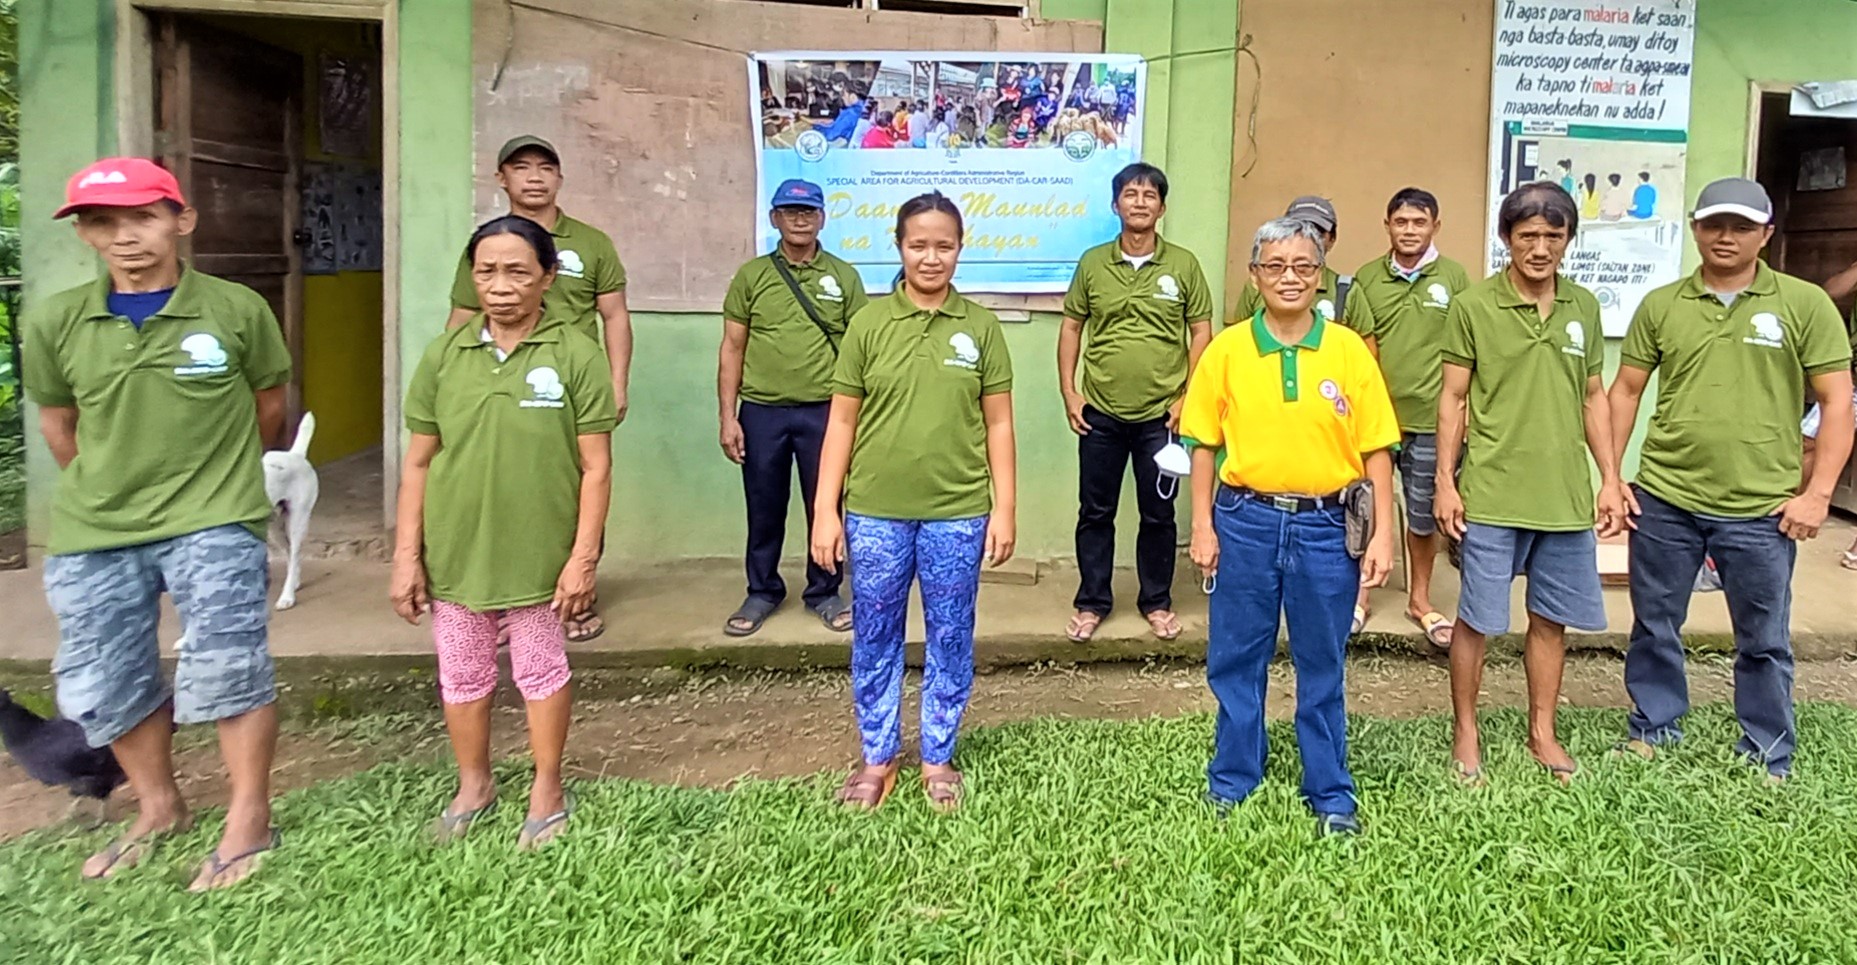 IP farmers in Pinukpuk, Kalinga educated on carabao management